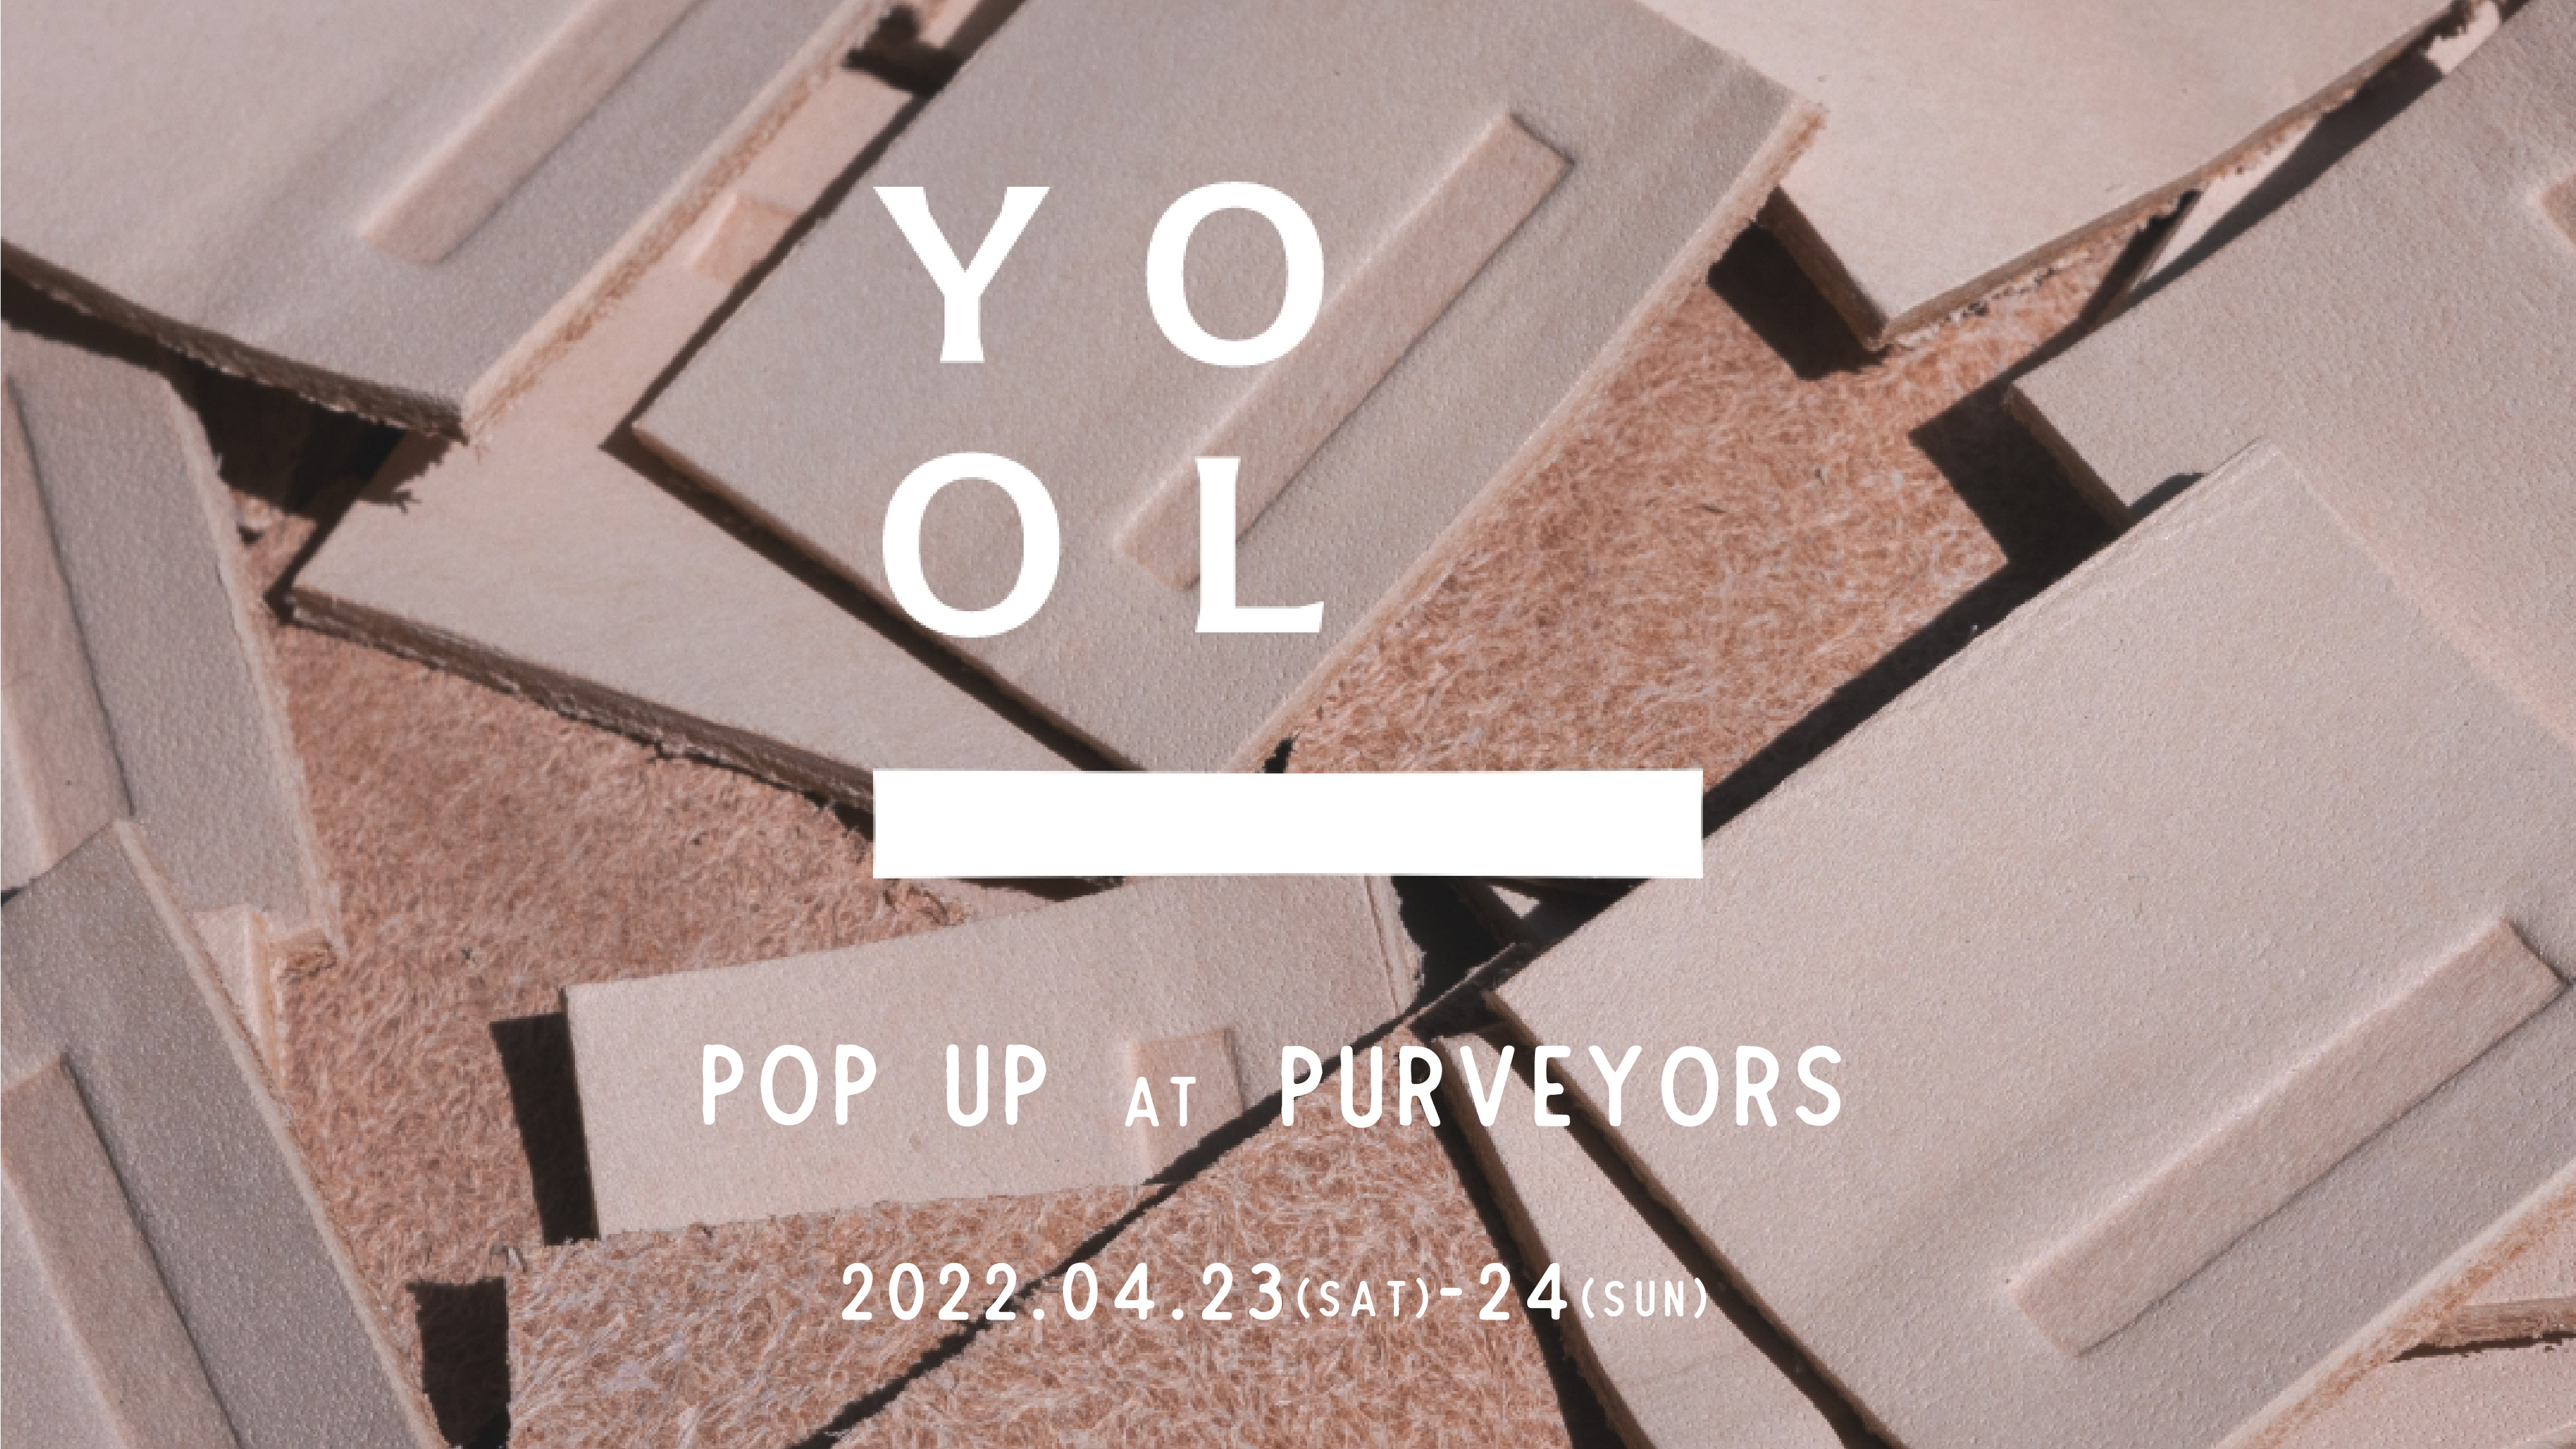 YOOL POP UP at purveyors